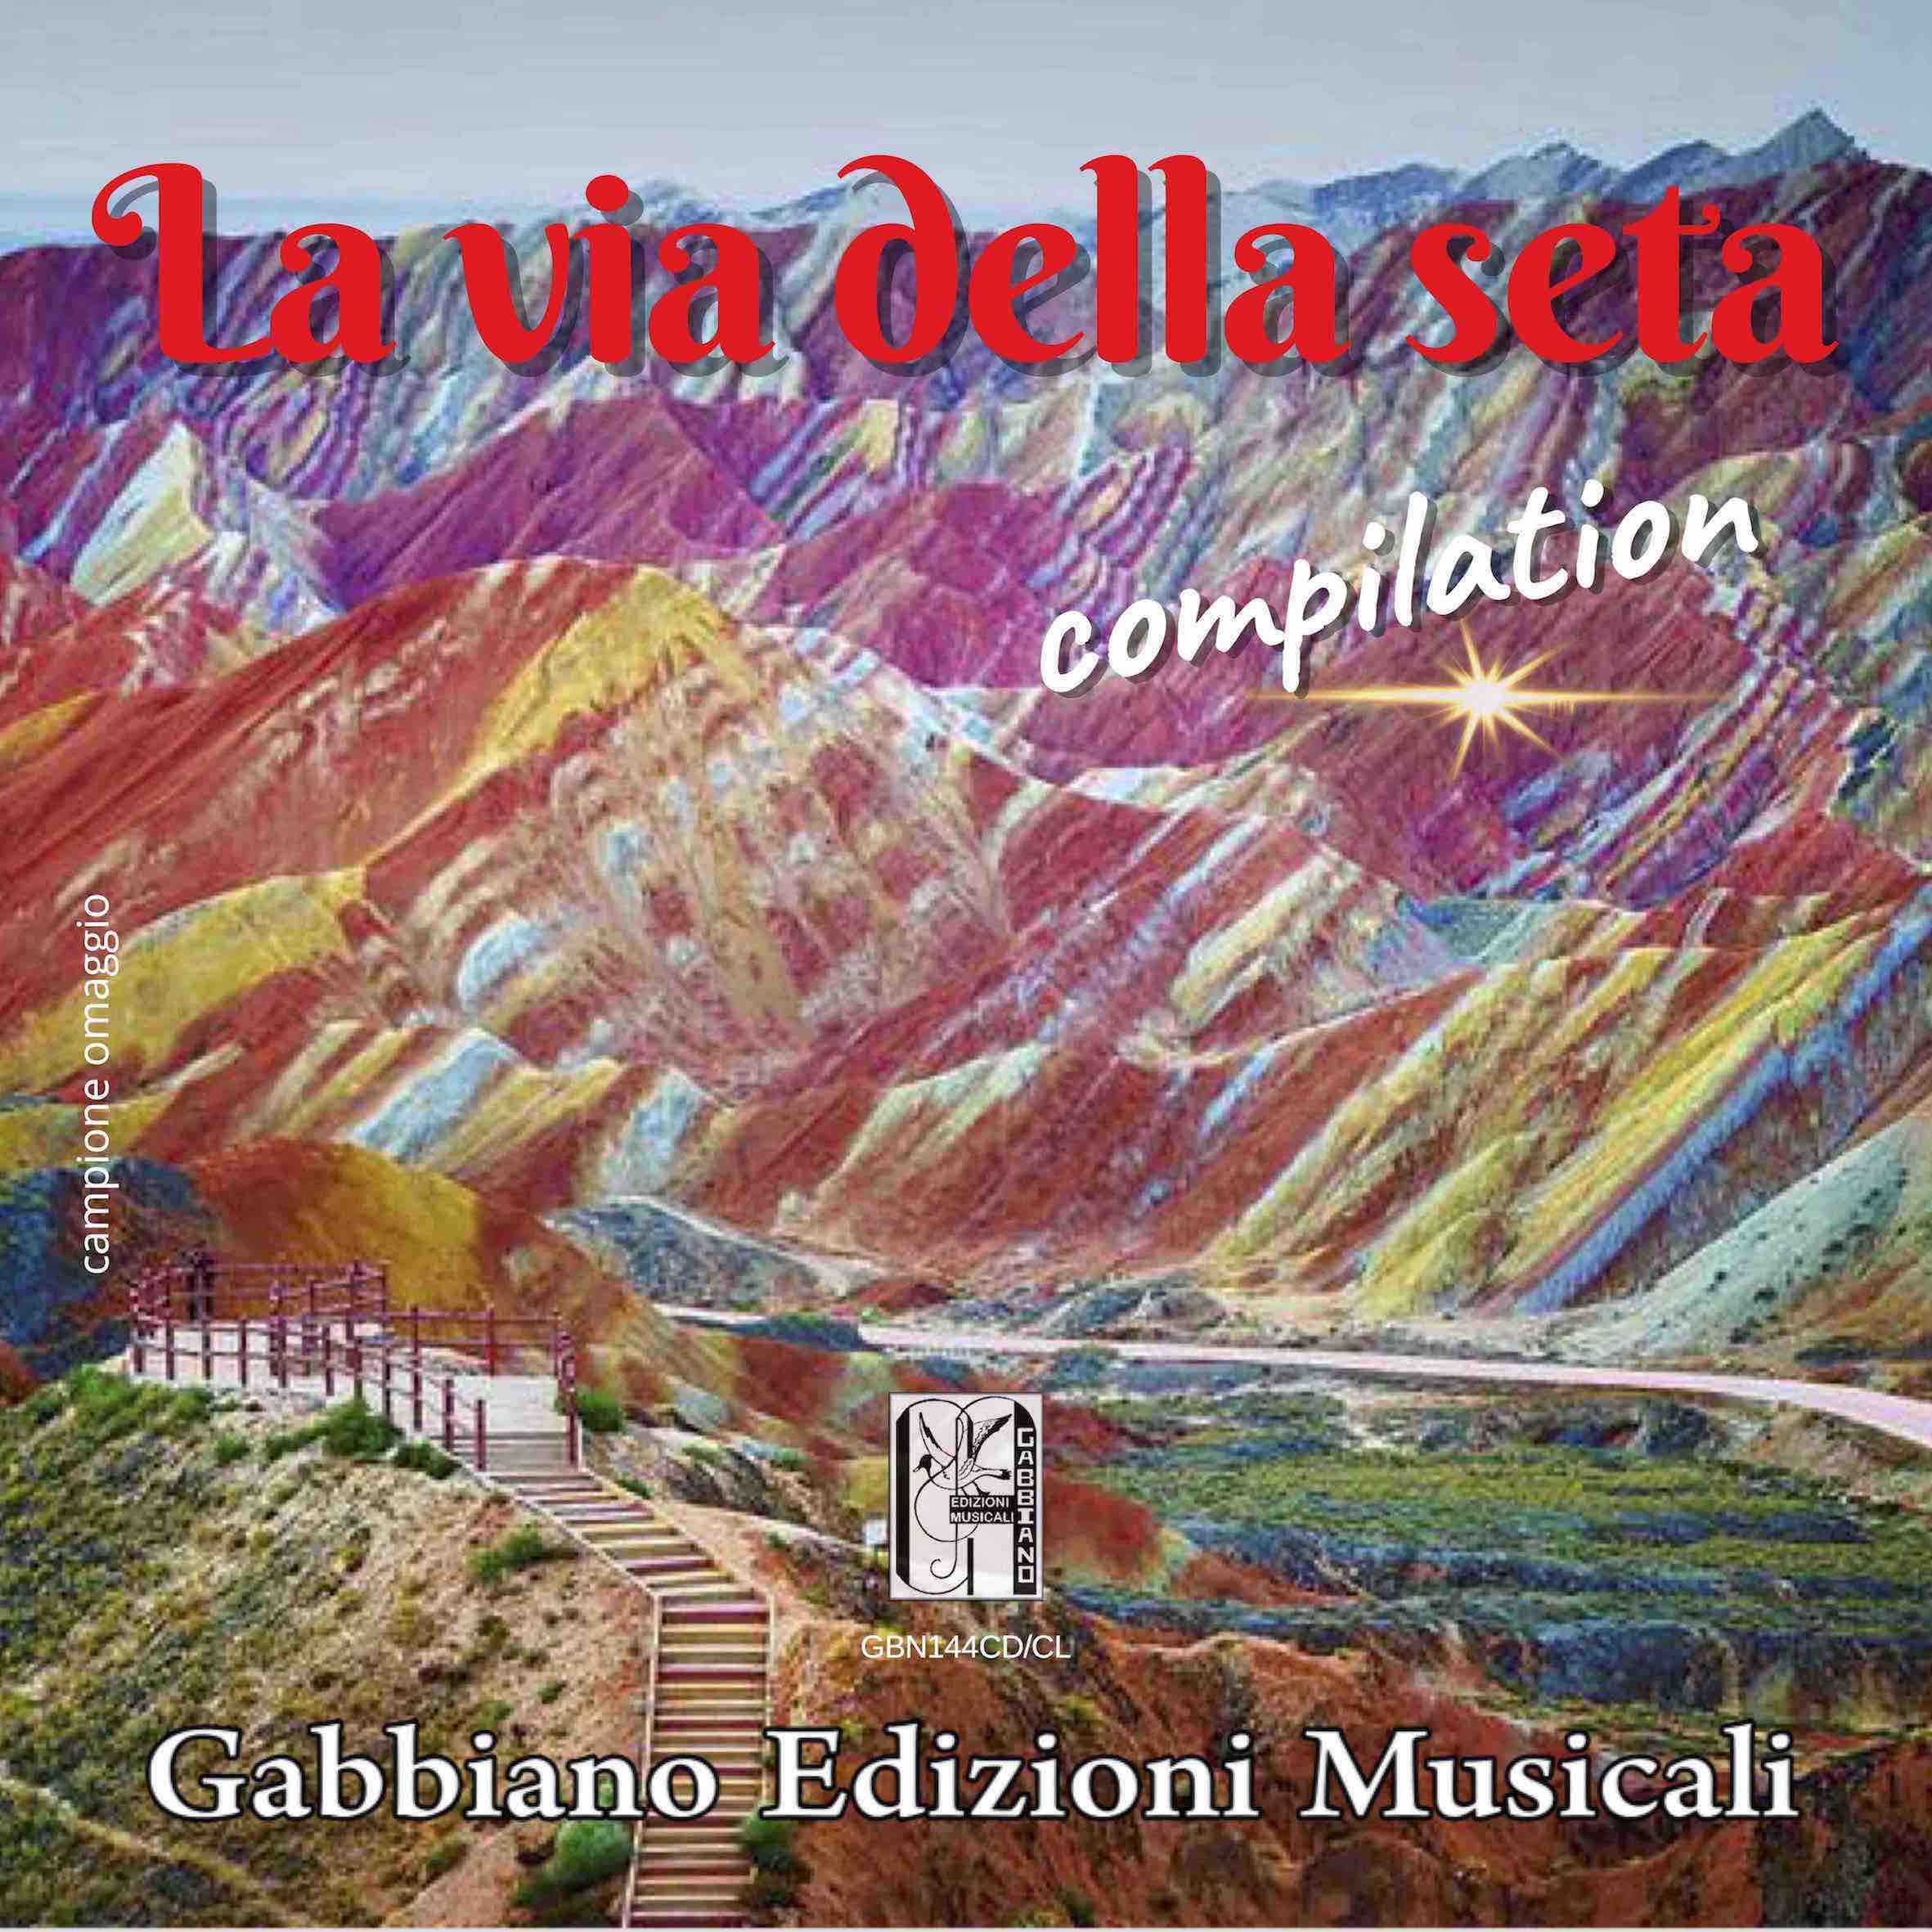 GBN144CD/CL - LA VIA DELLA SETA (compilation) - Volume 